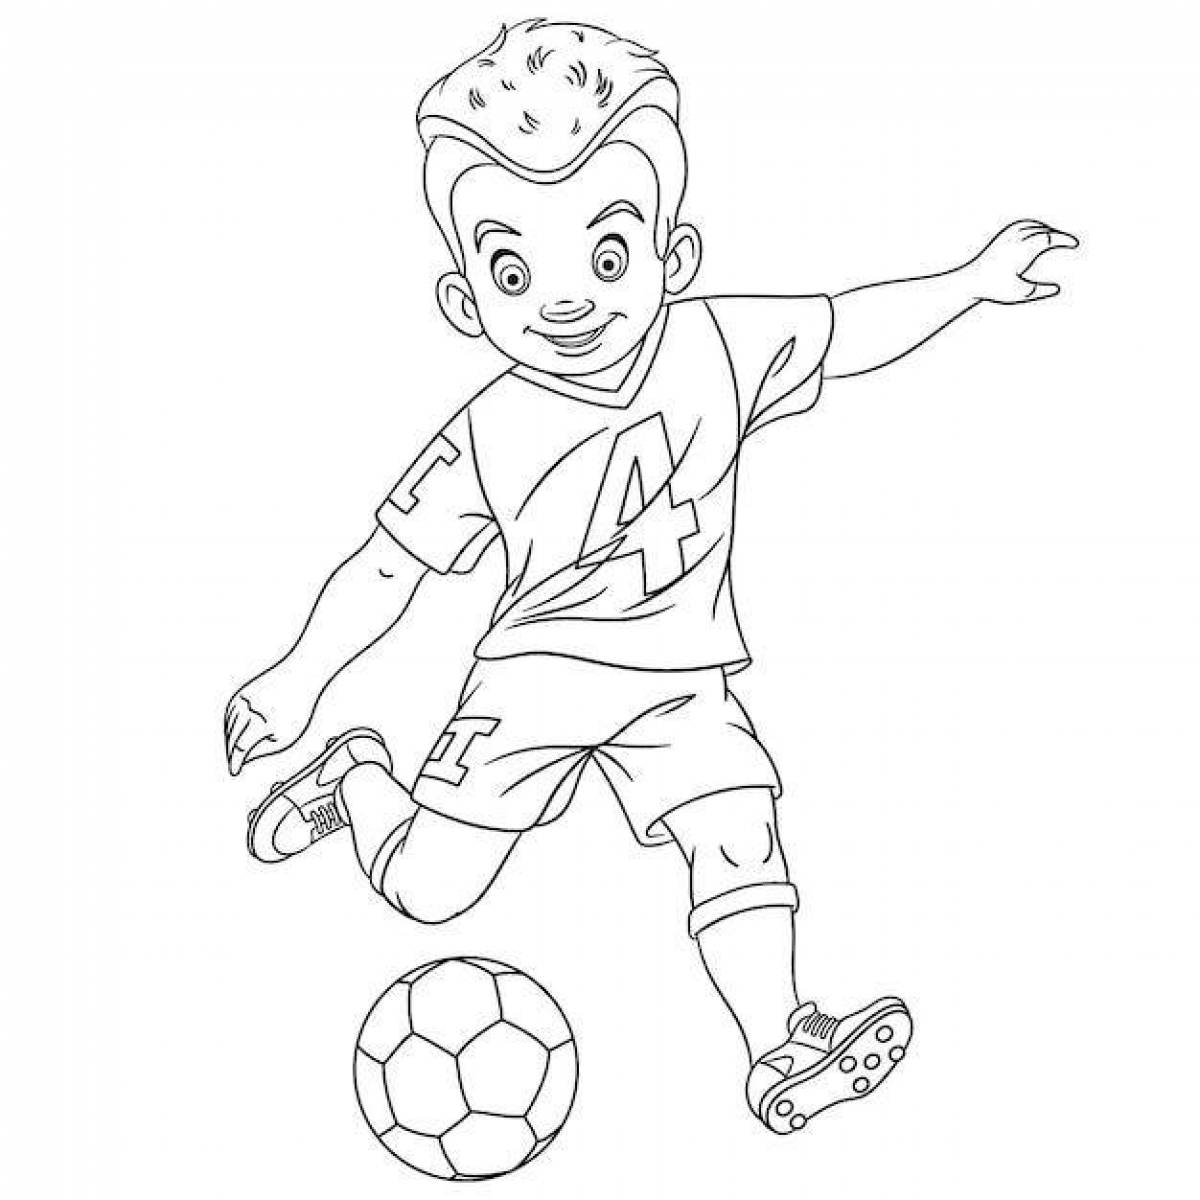 Coloring book hardworking soccer boy